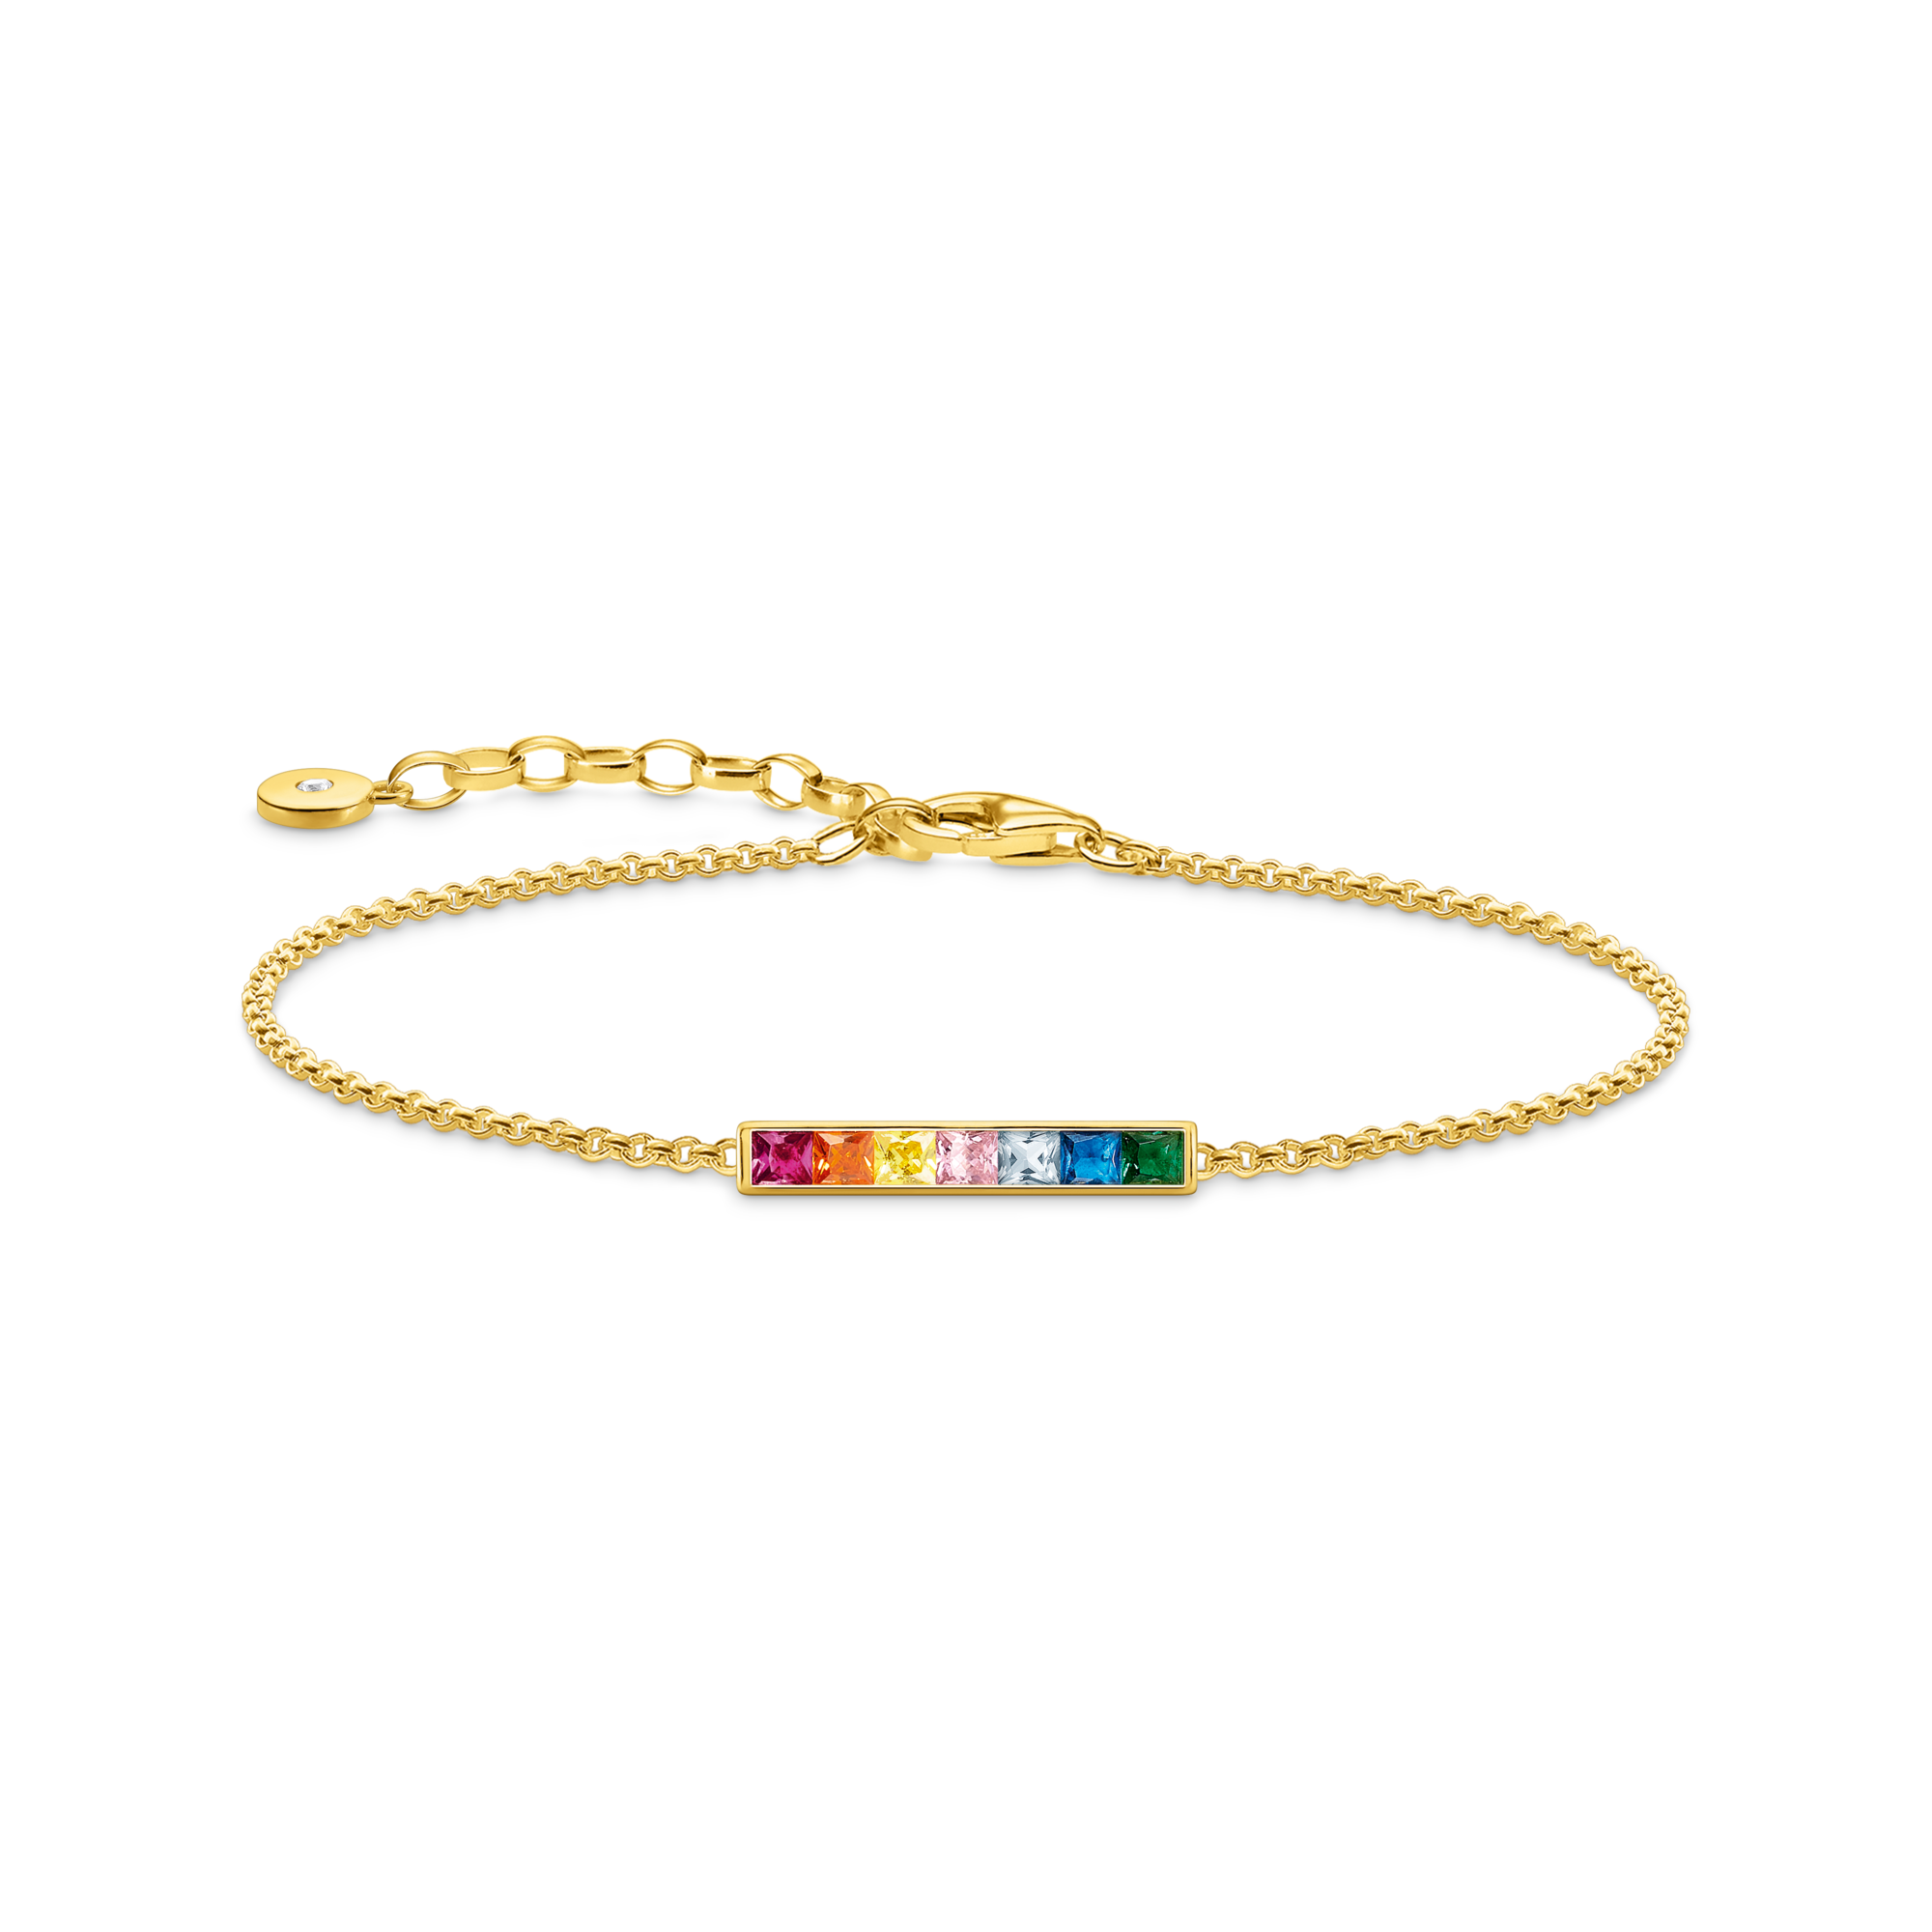 Tennis-Armband bunte Steine gold mehrfarbig Thomas Sabo Damen Accessoires Schmuck Armbänder 